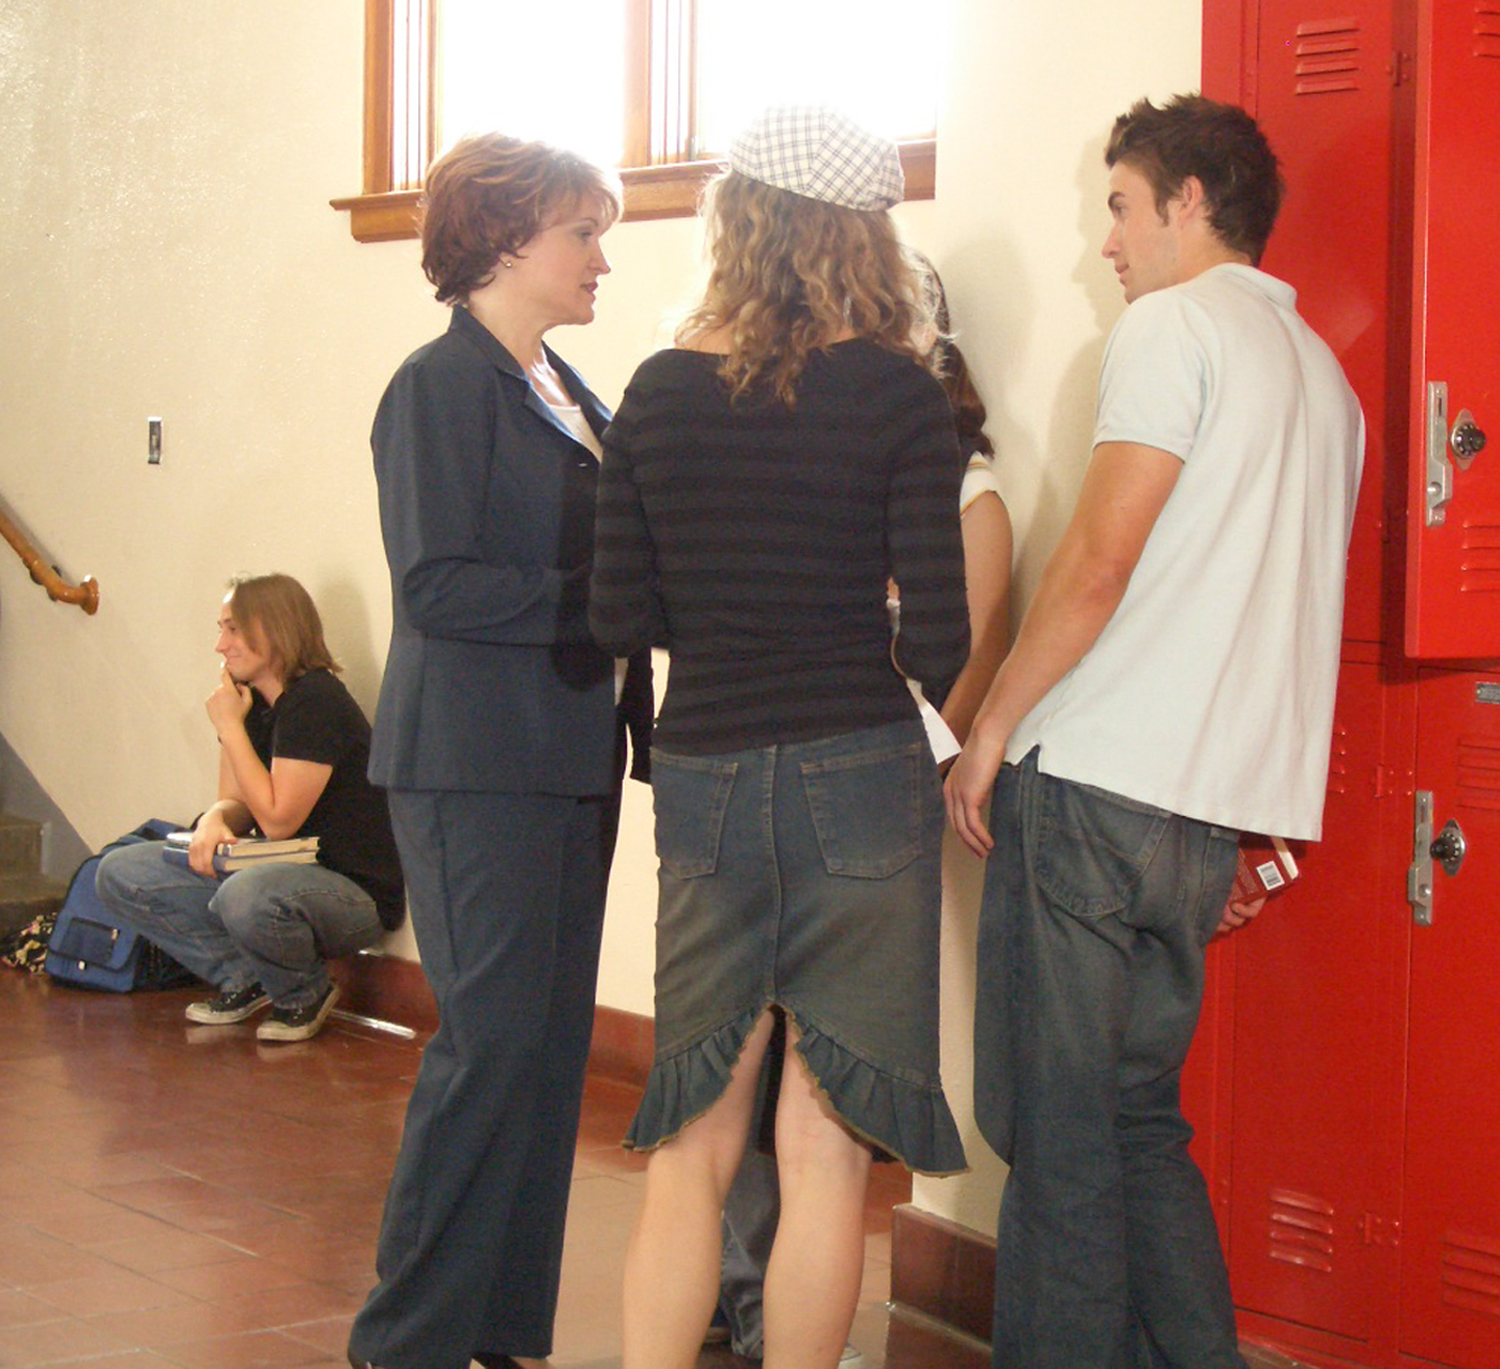 as Teacher (standing, left) in Teenage Drama, directed by Luigi DeSole - Pasadena, California 2005